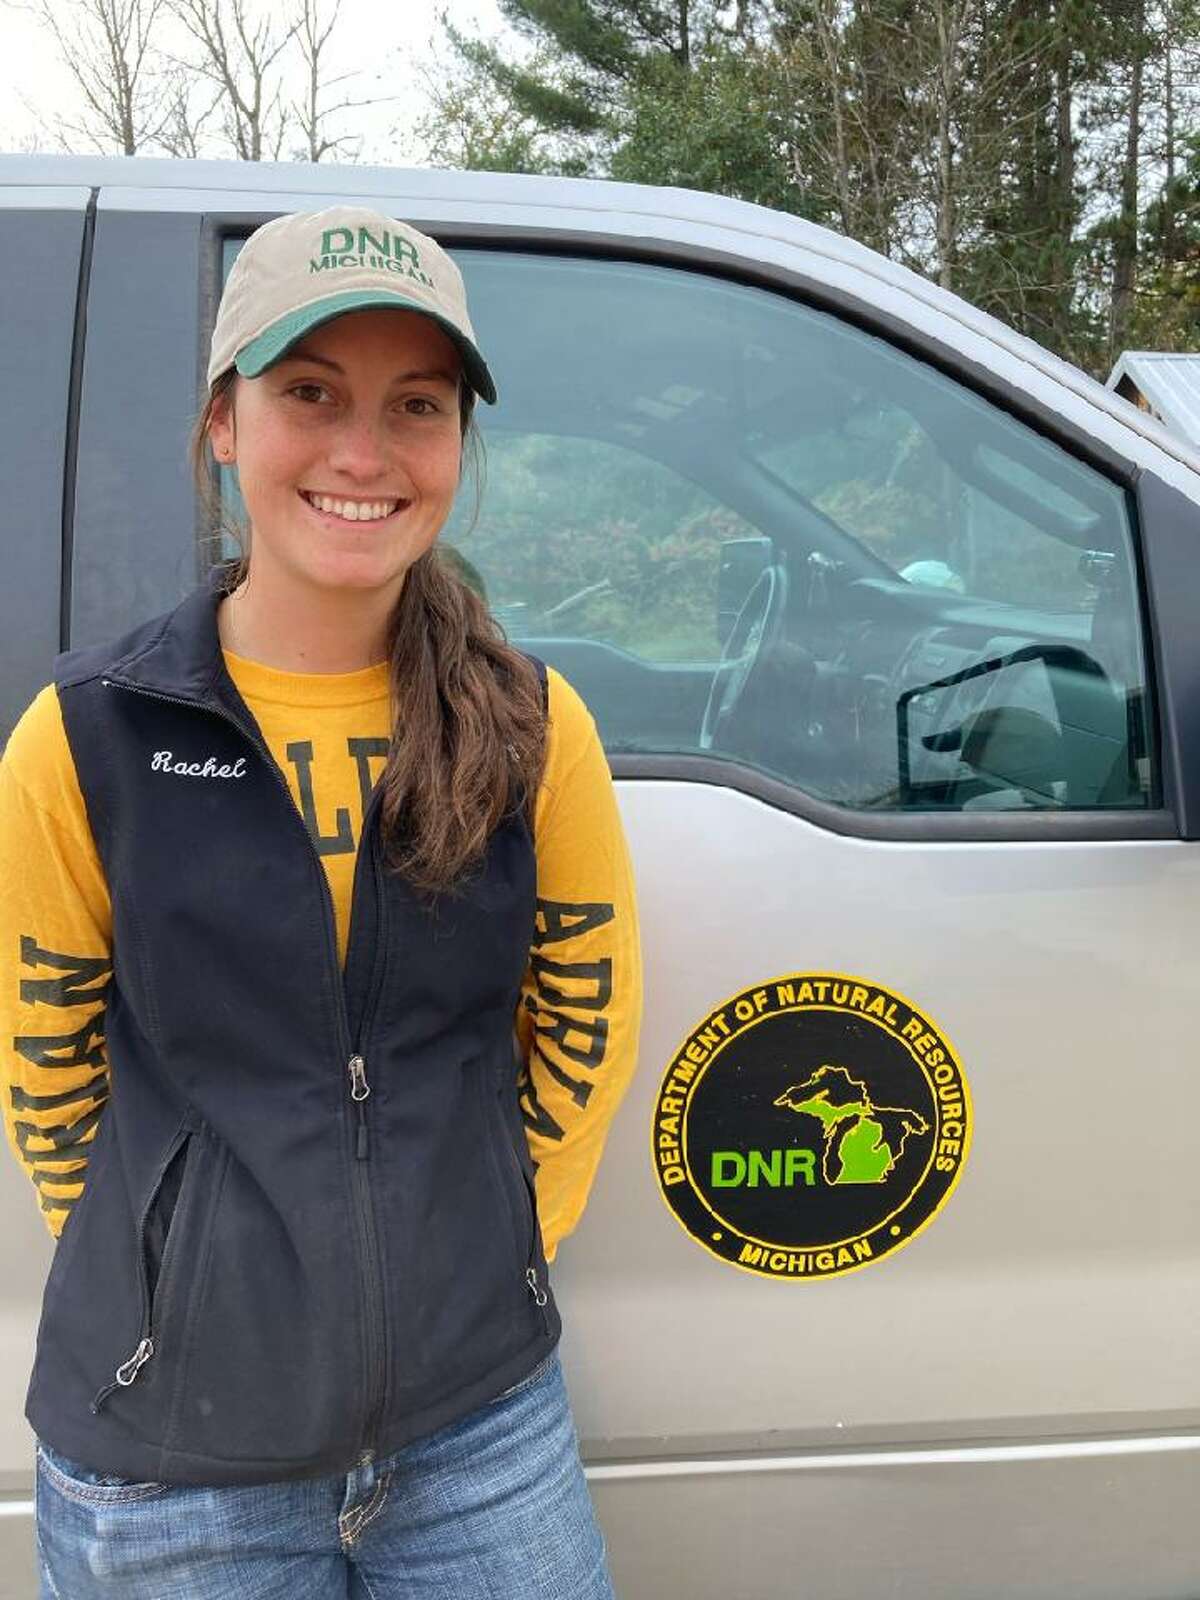 Rachel Kanaziz is the area's DNR wildlife technician.